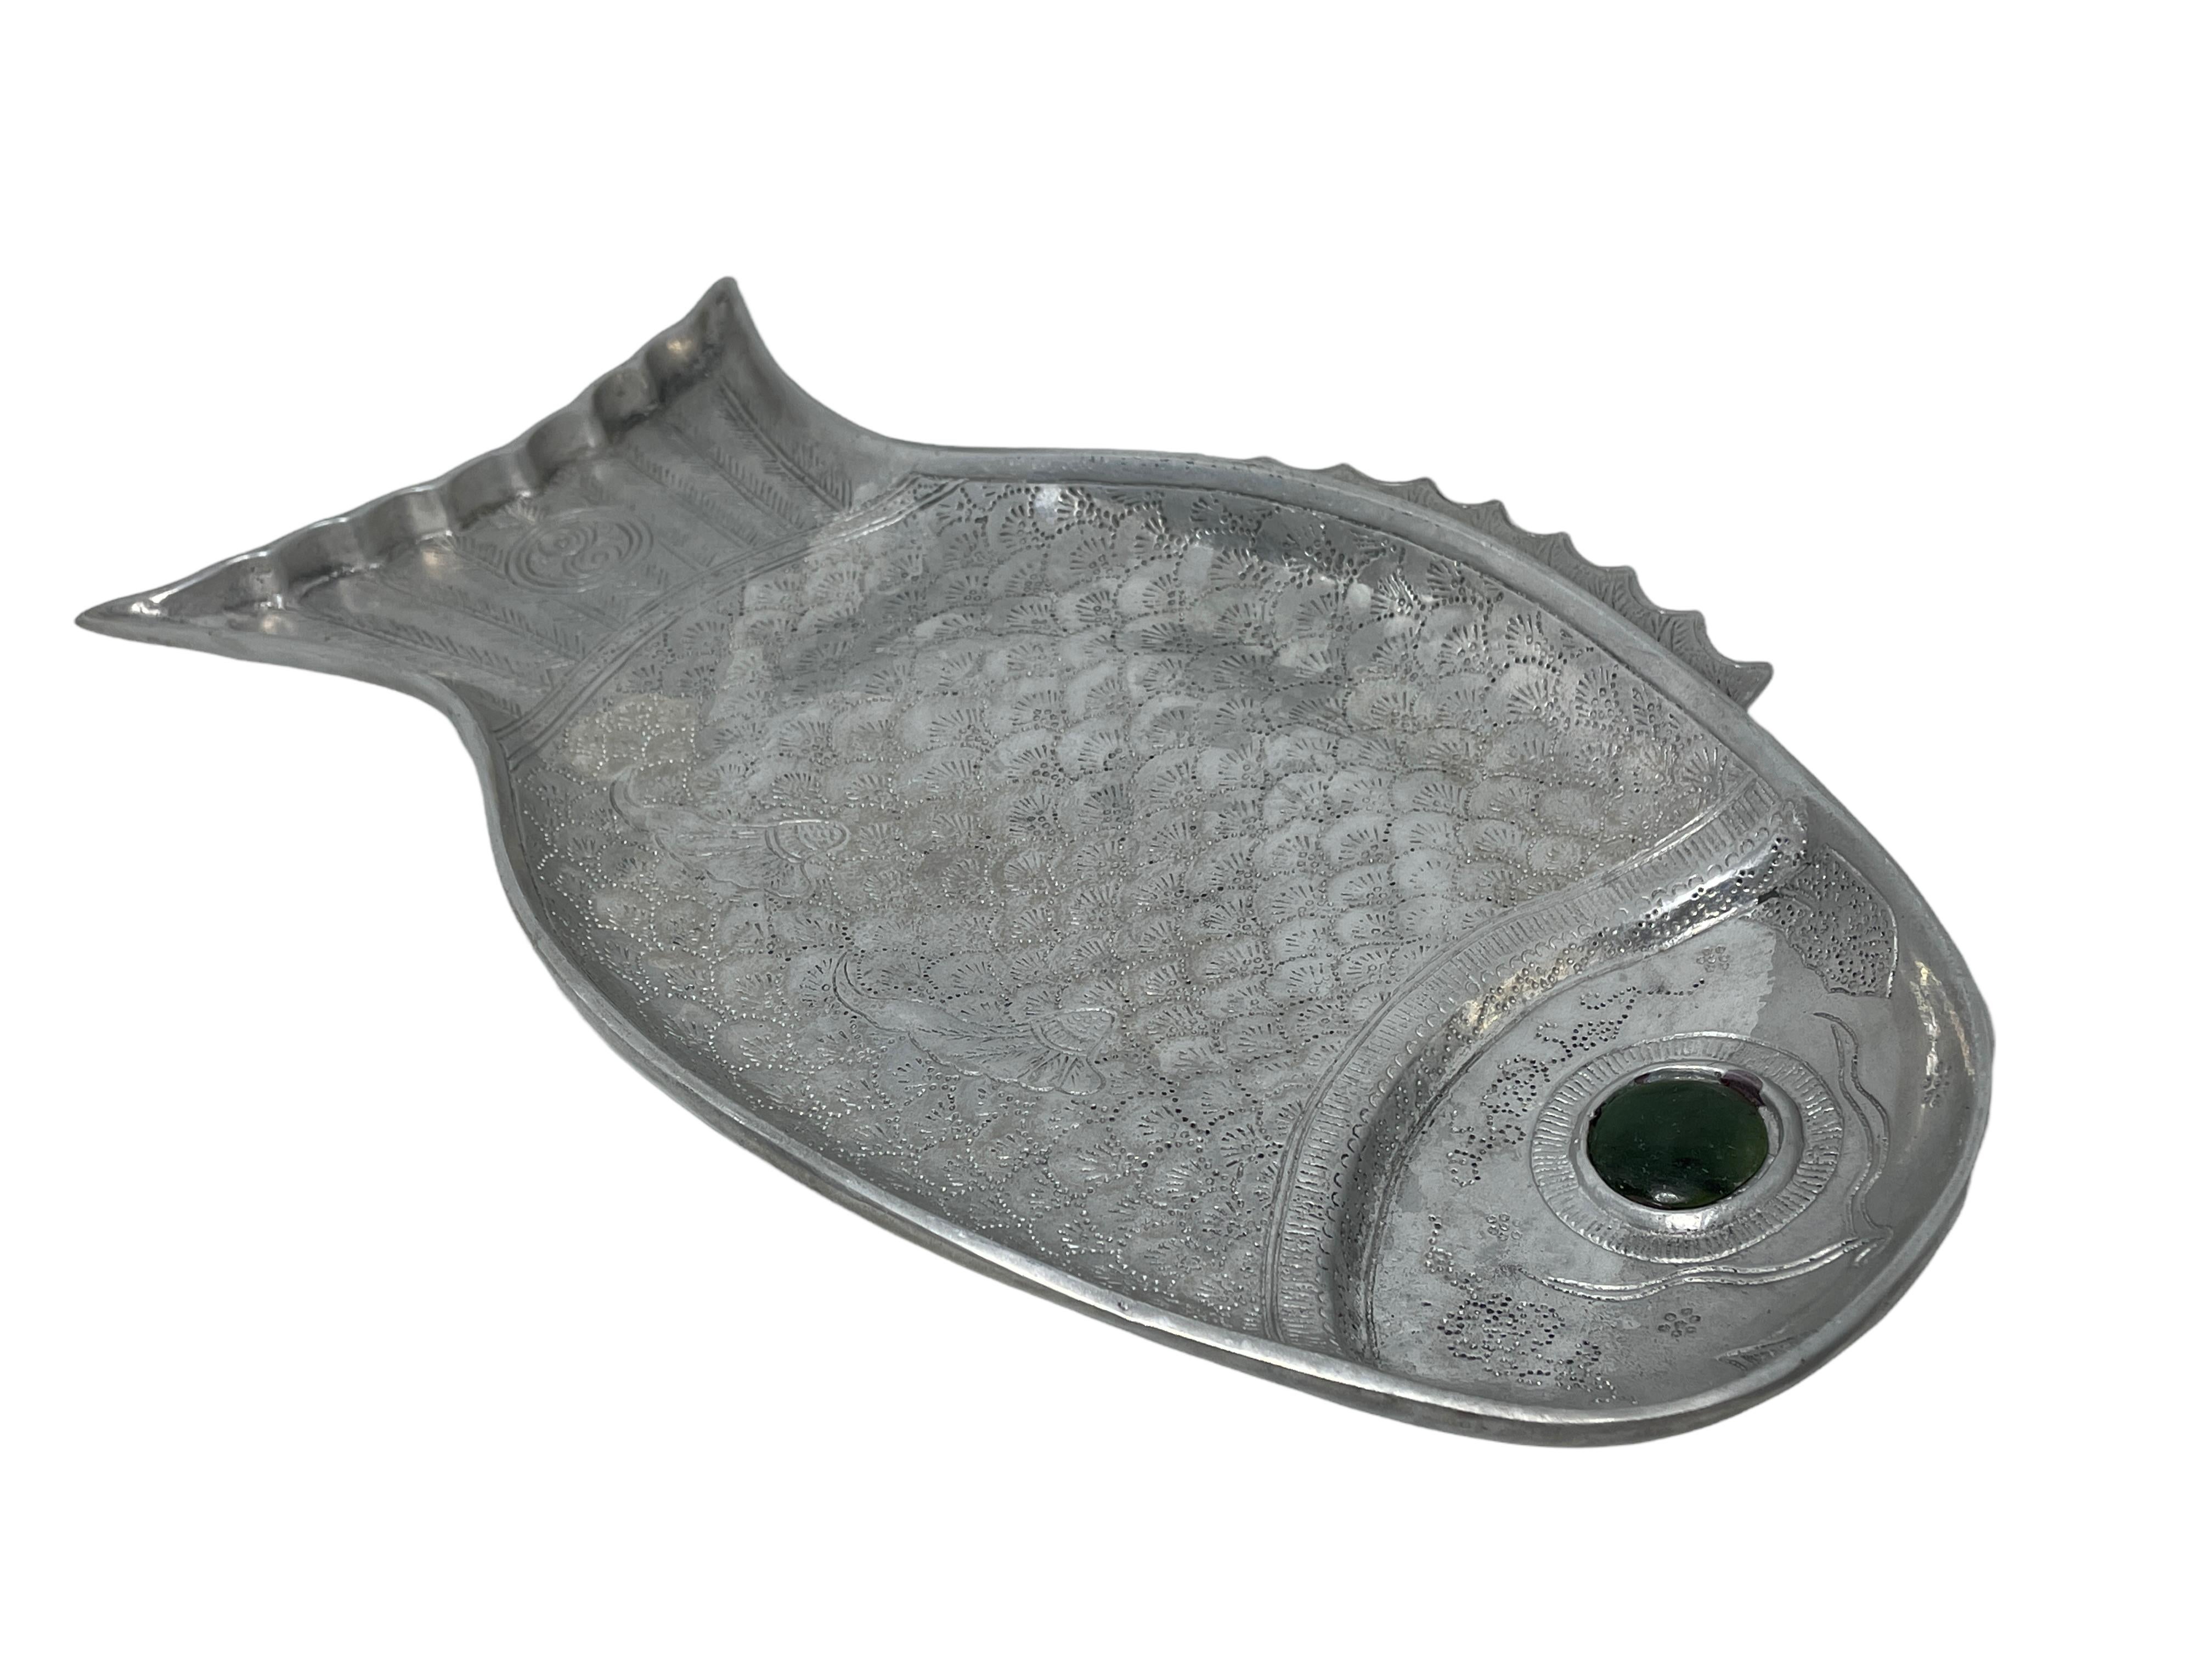 American Arthur Court Polished Aluminum Fish Shaped Serving Platter, 1977 For Sale